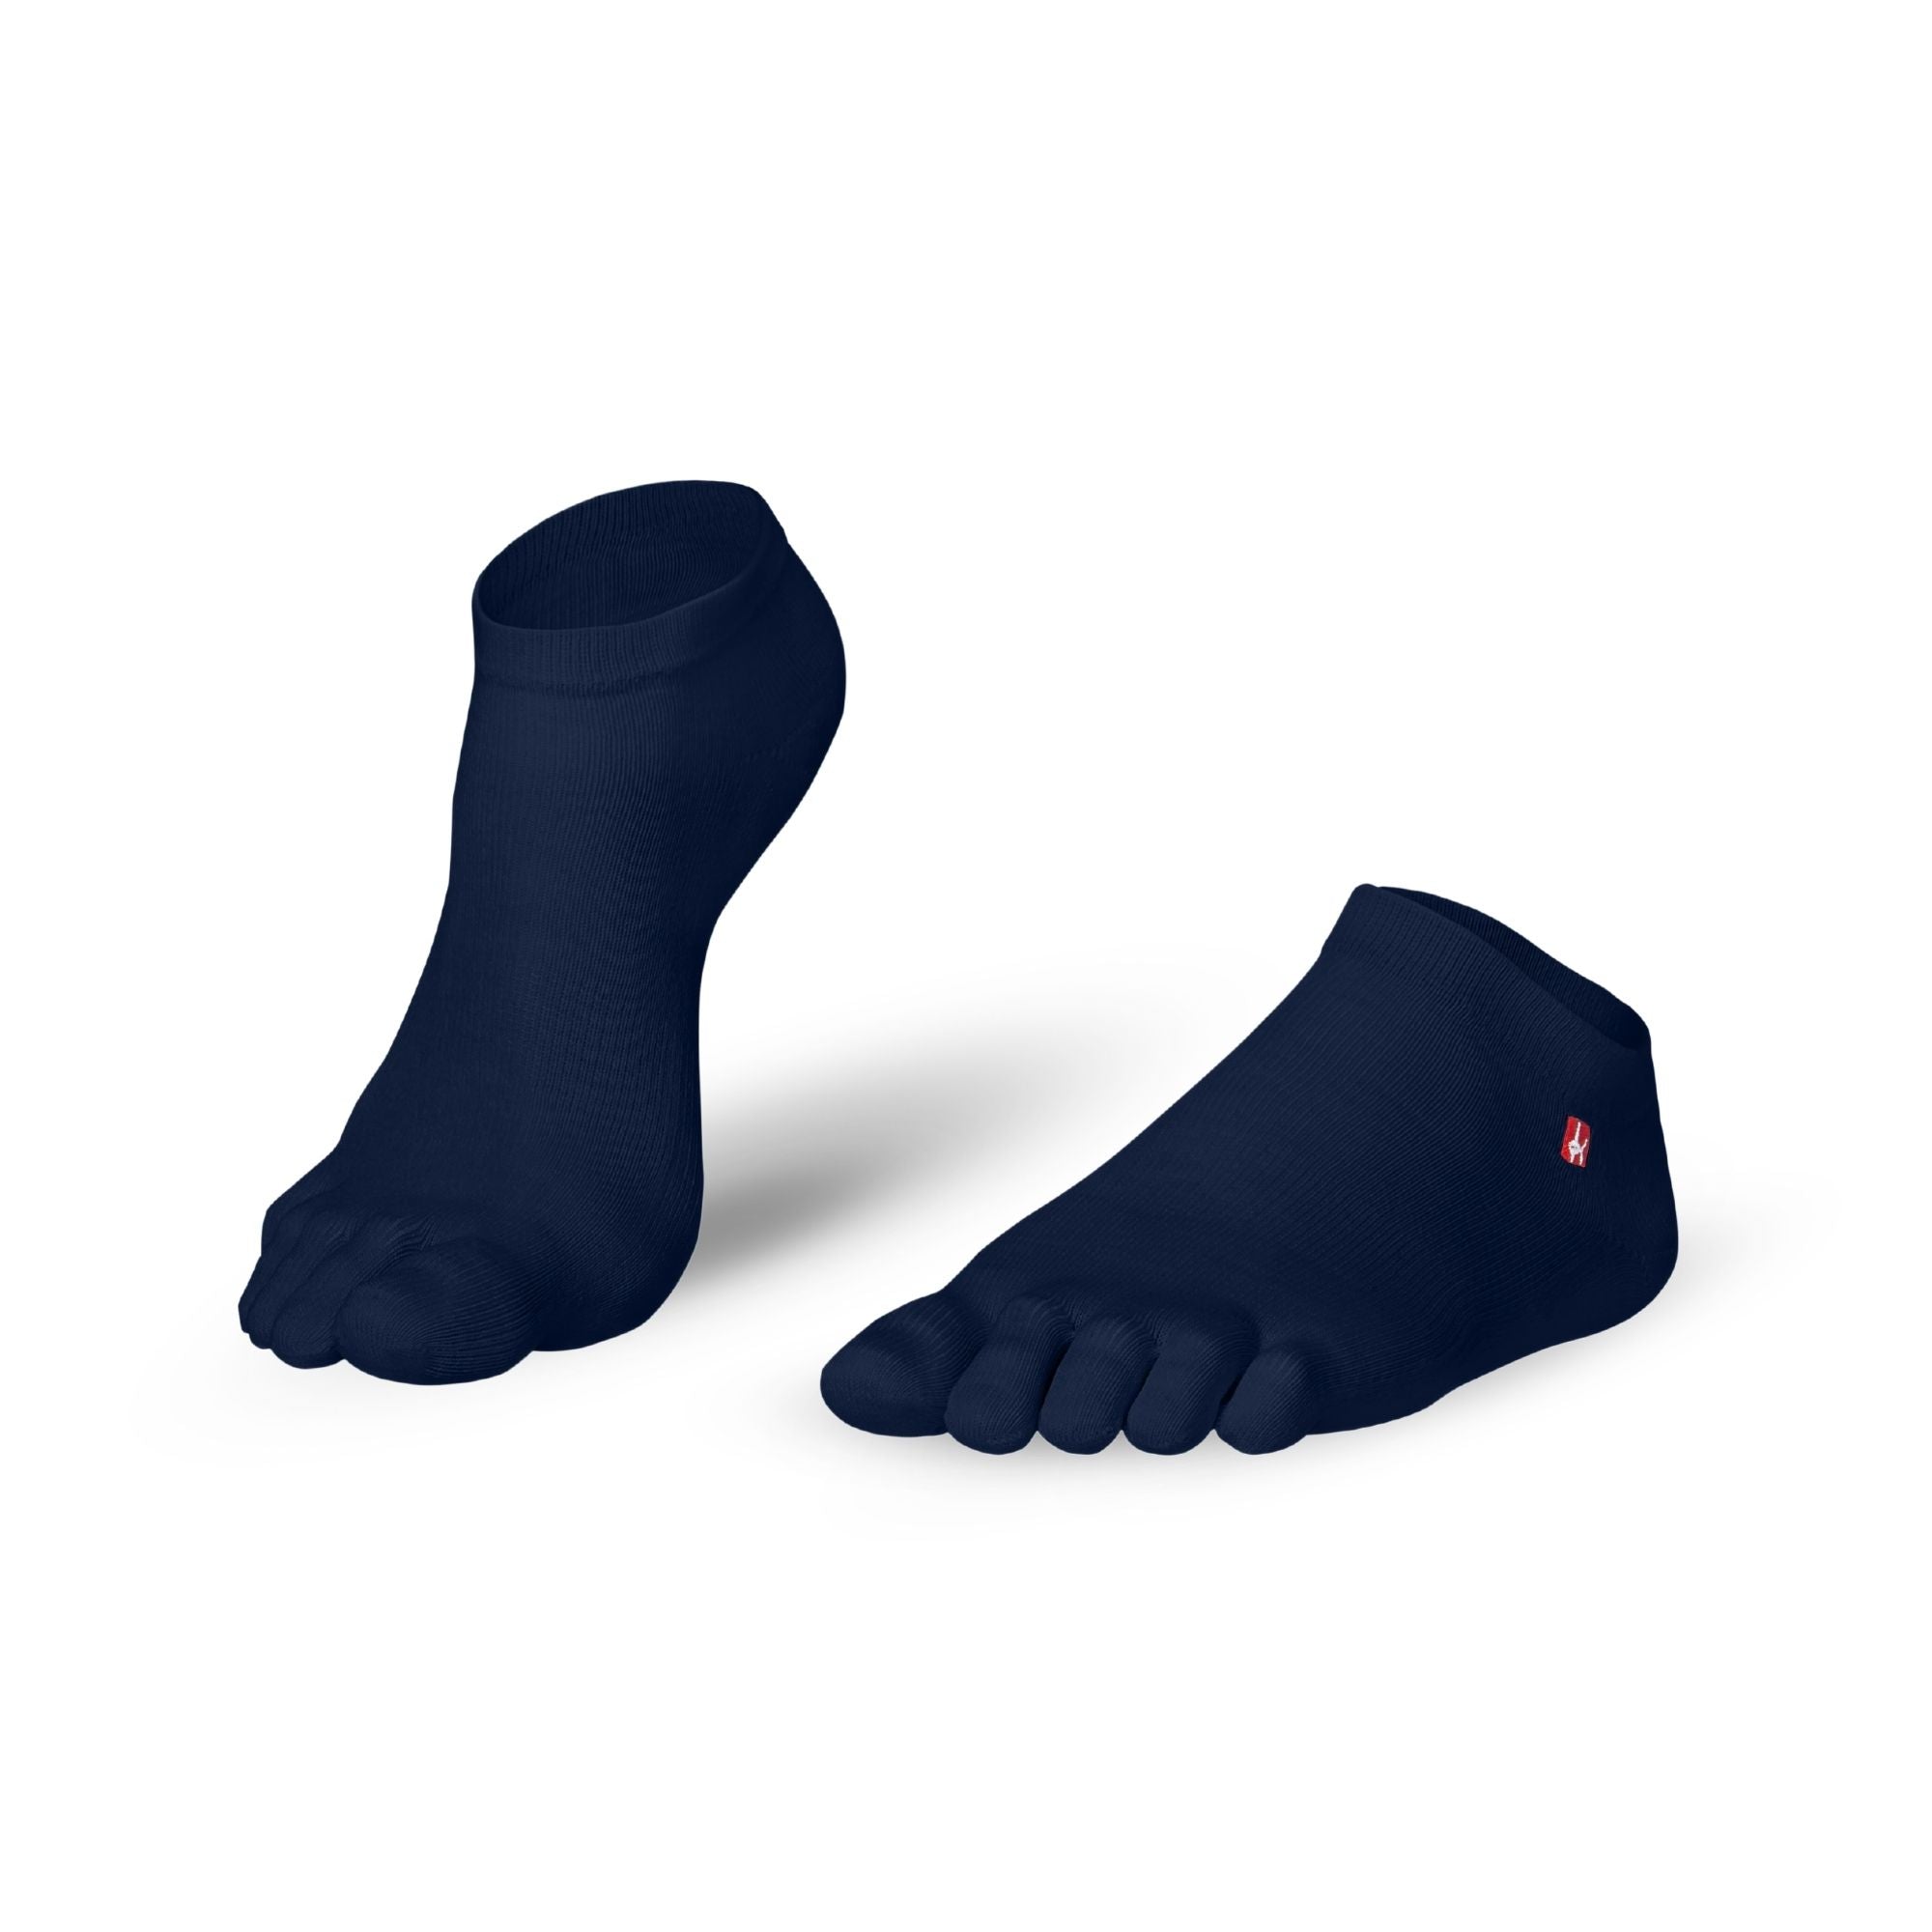 Toe socks Coolmax Sneaker from Knitido Track & Trail ultralite fresh in navy